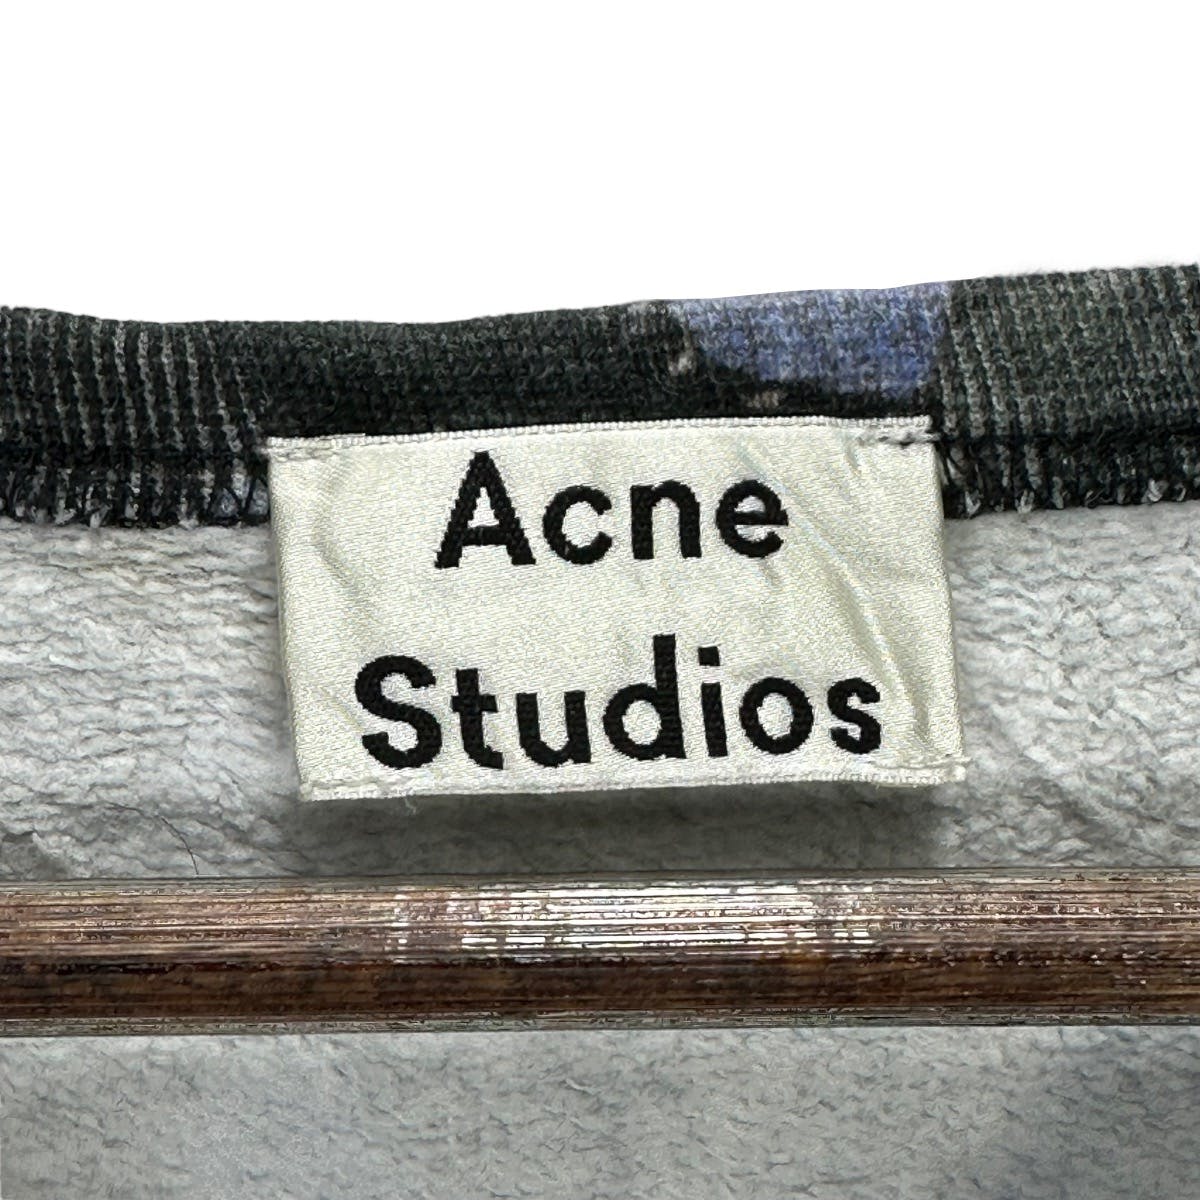 Acne Studios College Print AW 14 Sweatshirt - 7